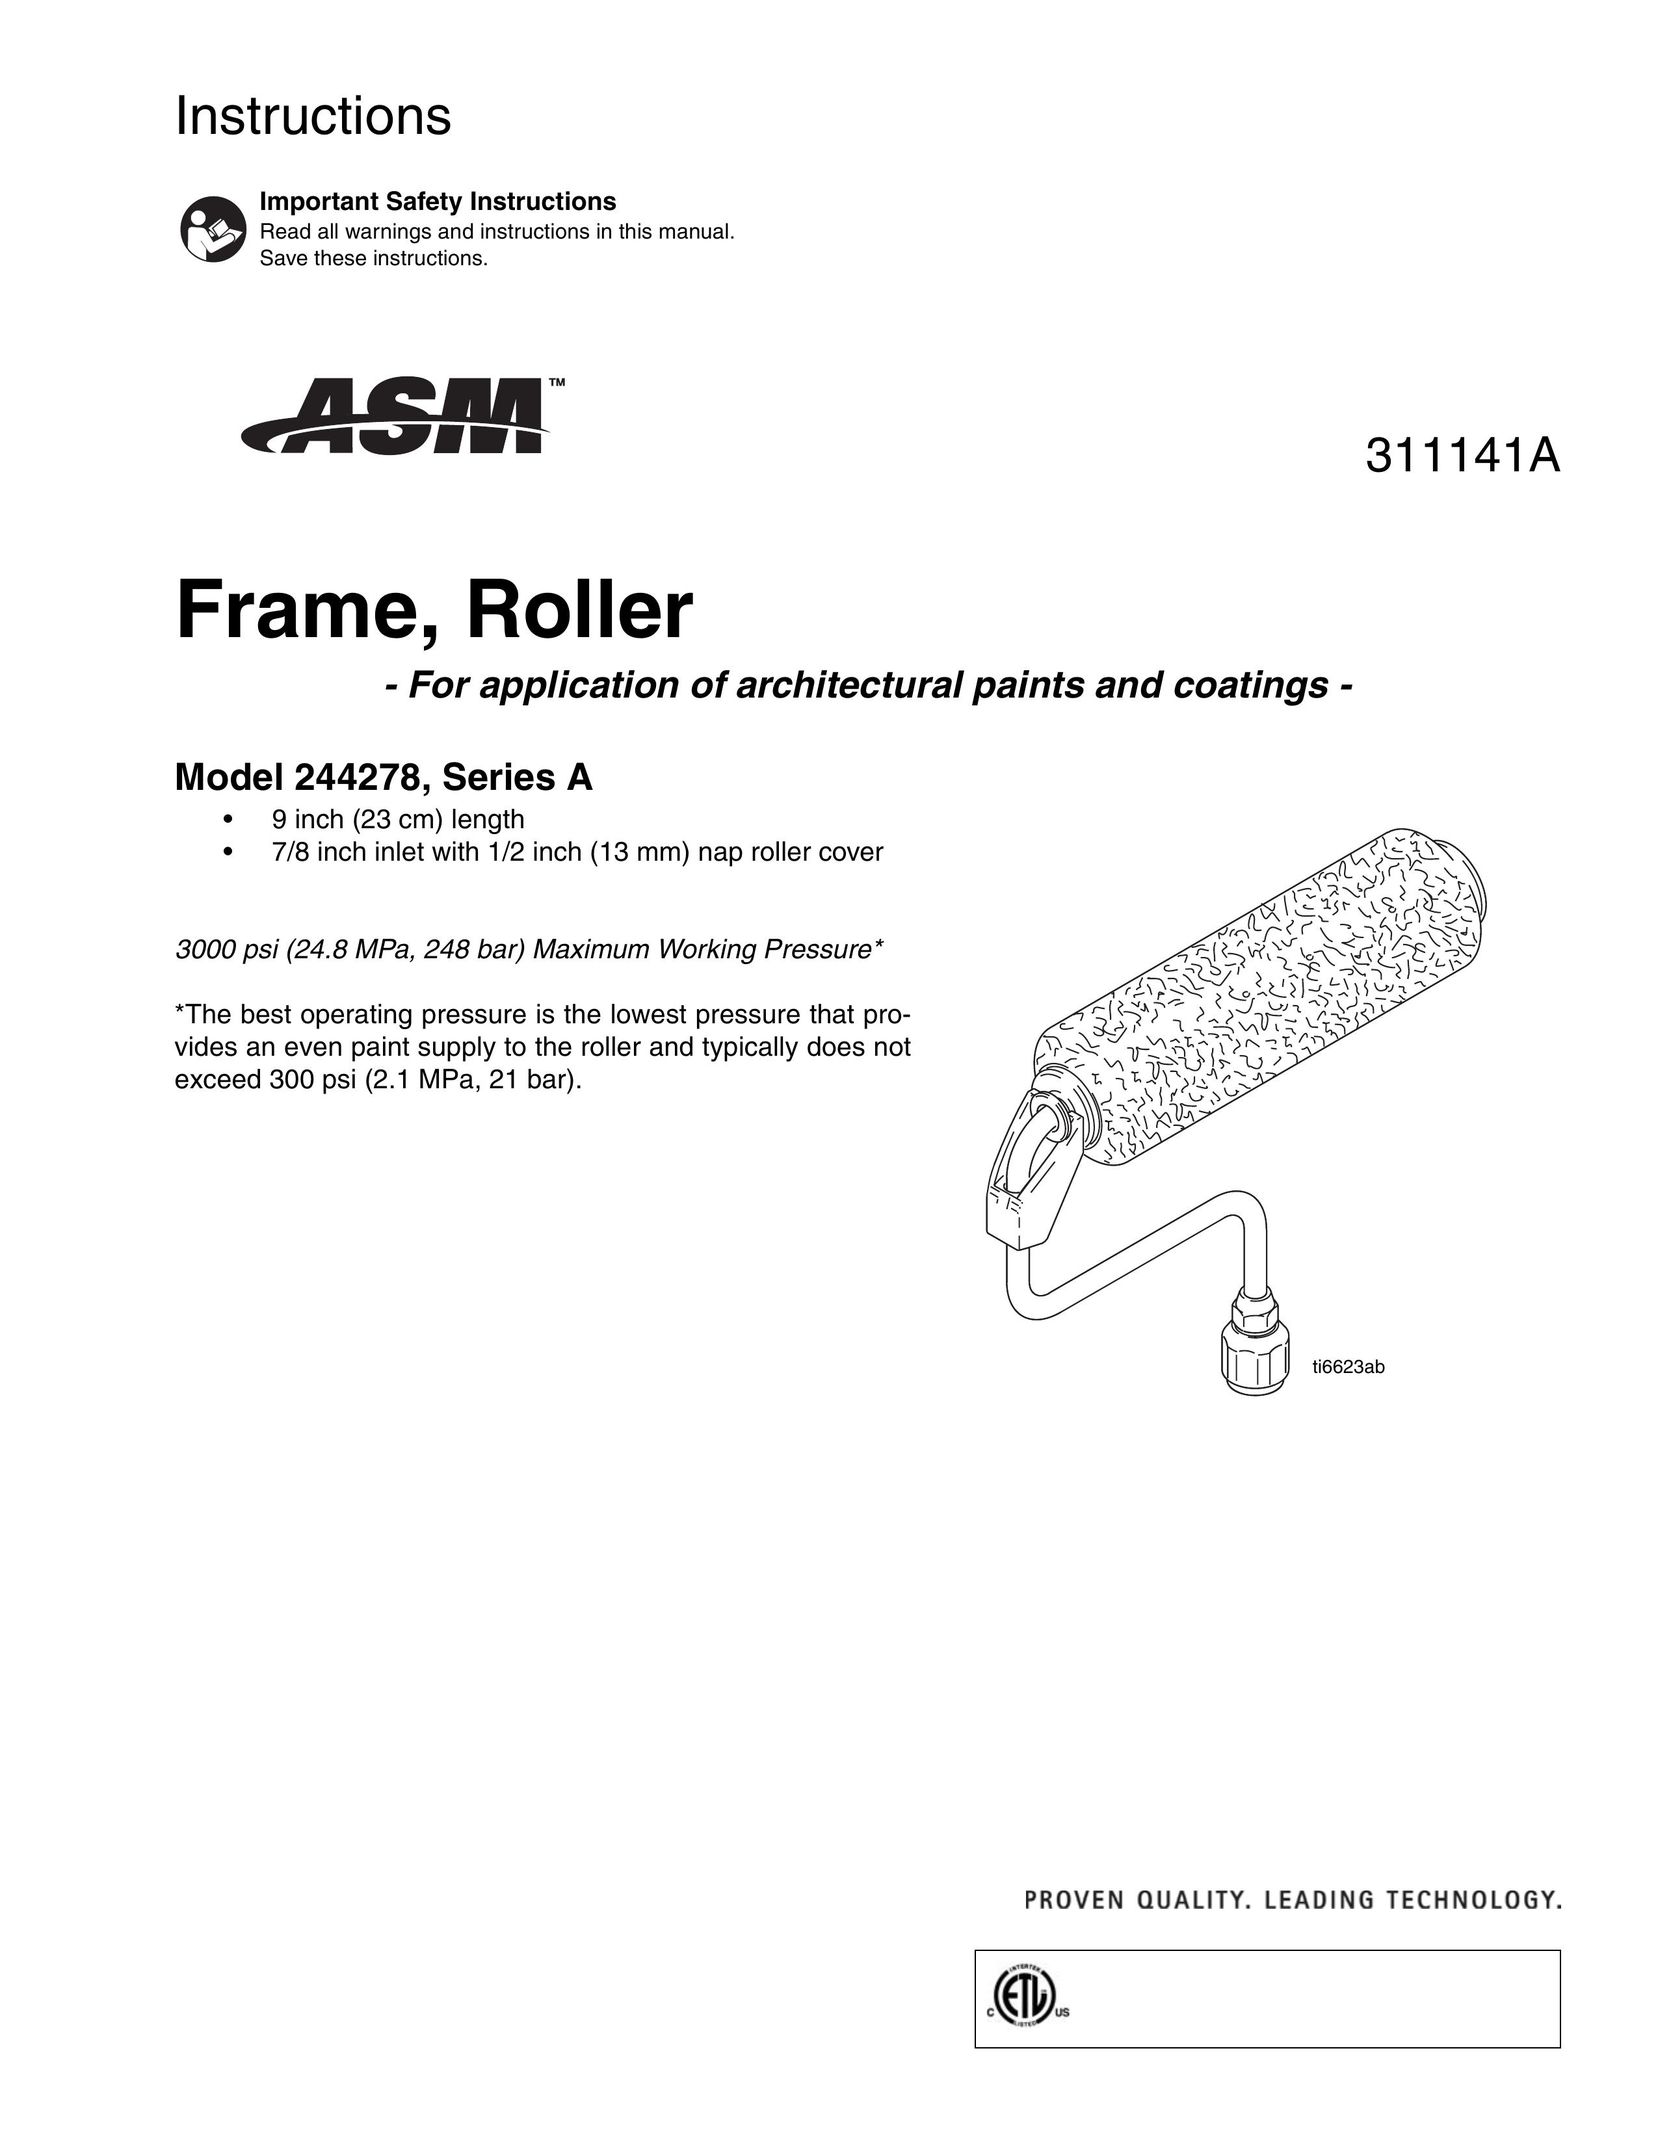 Graco Inc. 311141A Power Roller User Manual